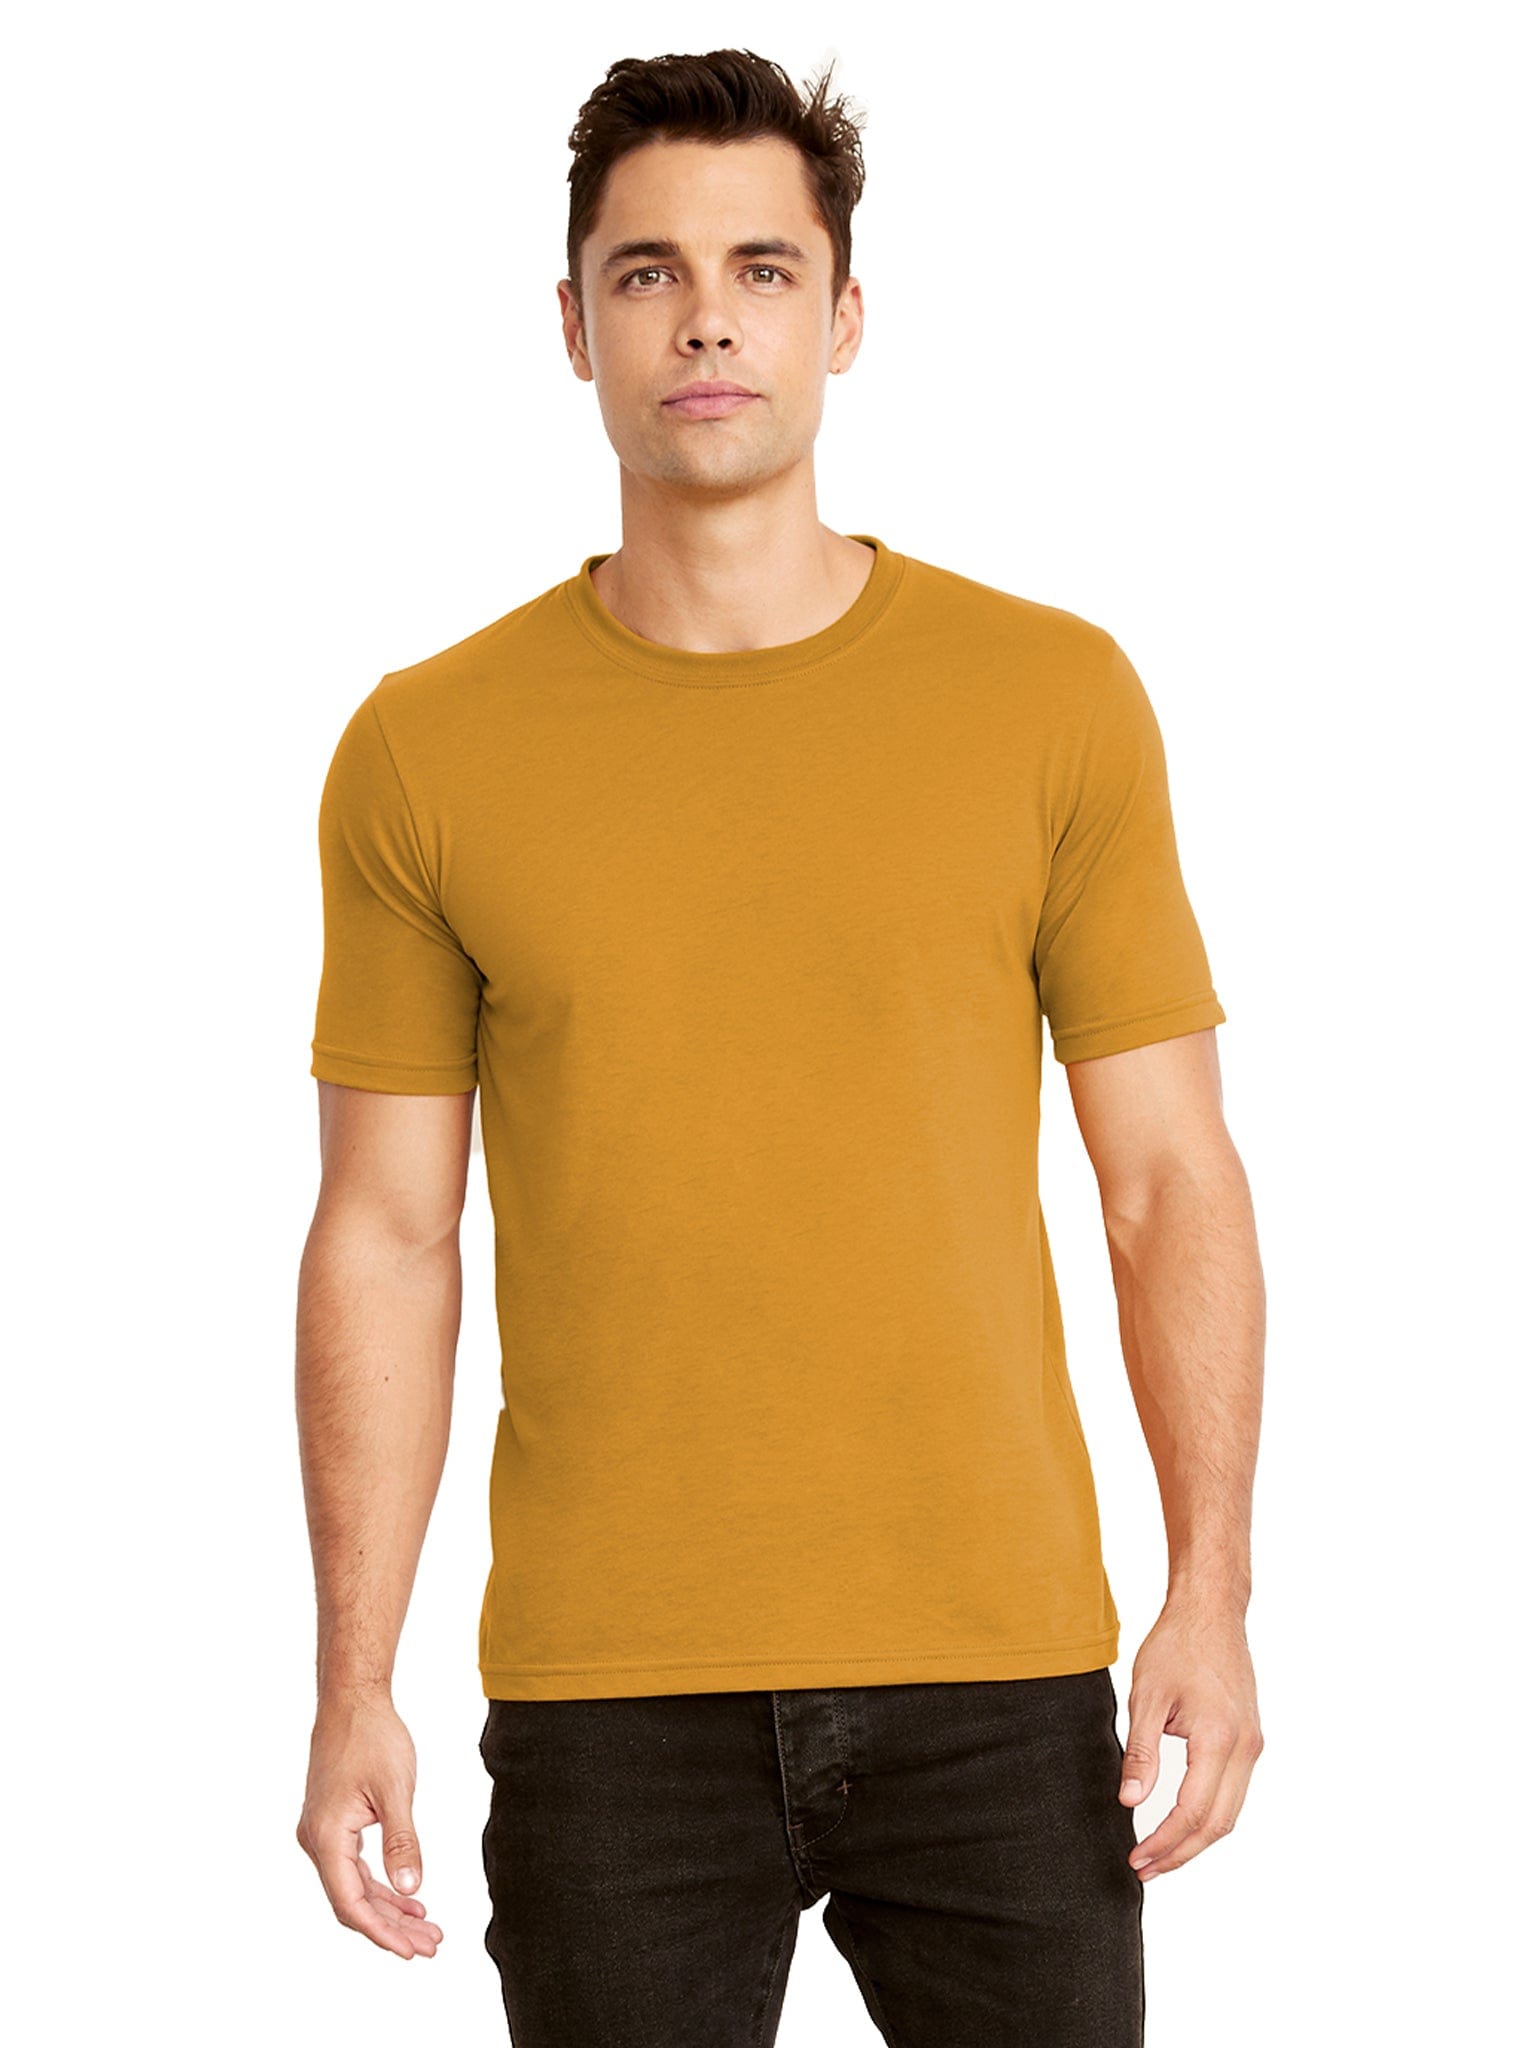 Next Level 3600 Unisex Cotton T Shirt - Teal - 2XL